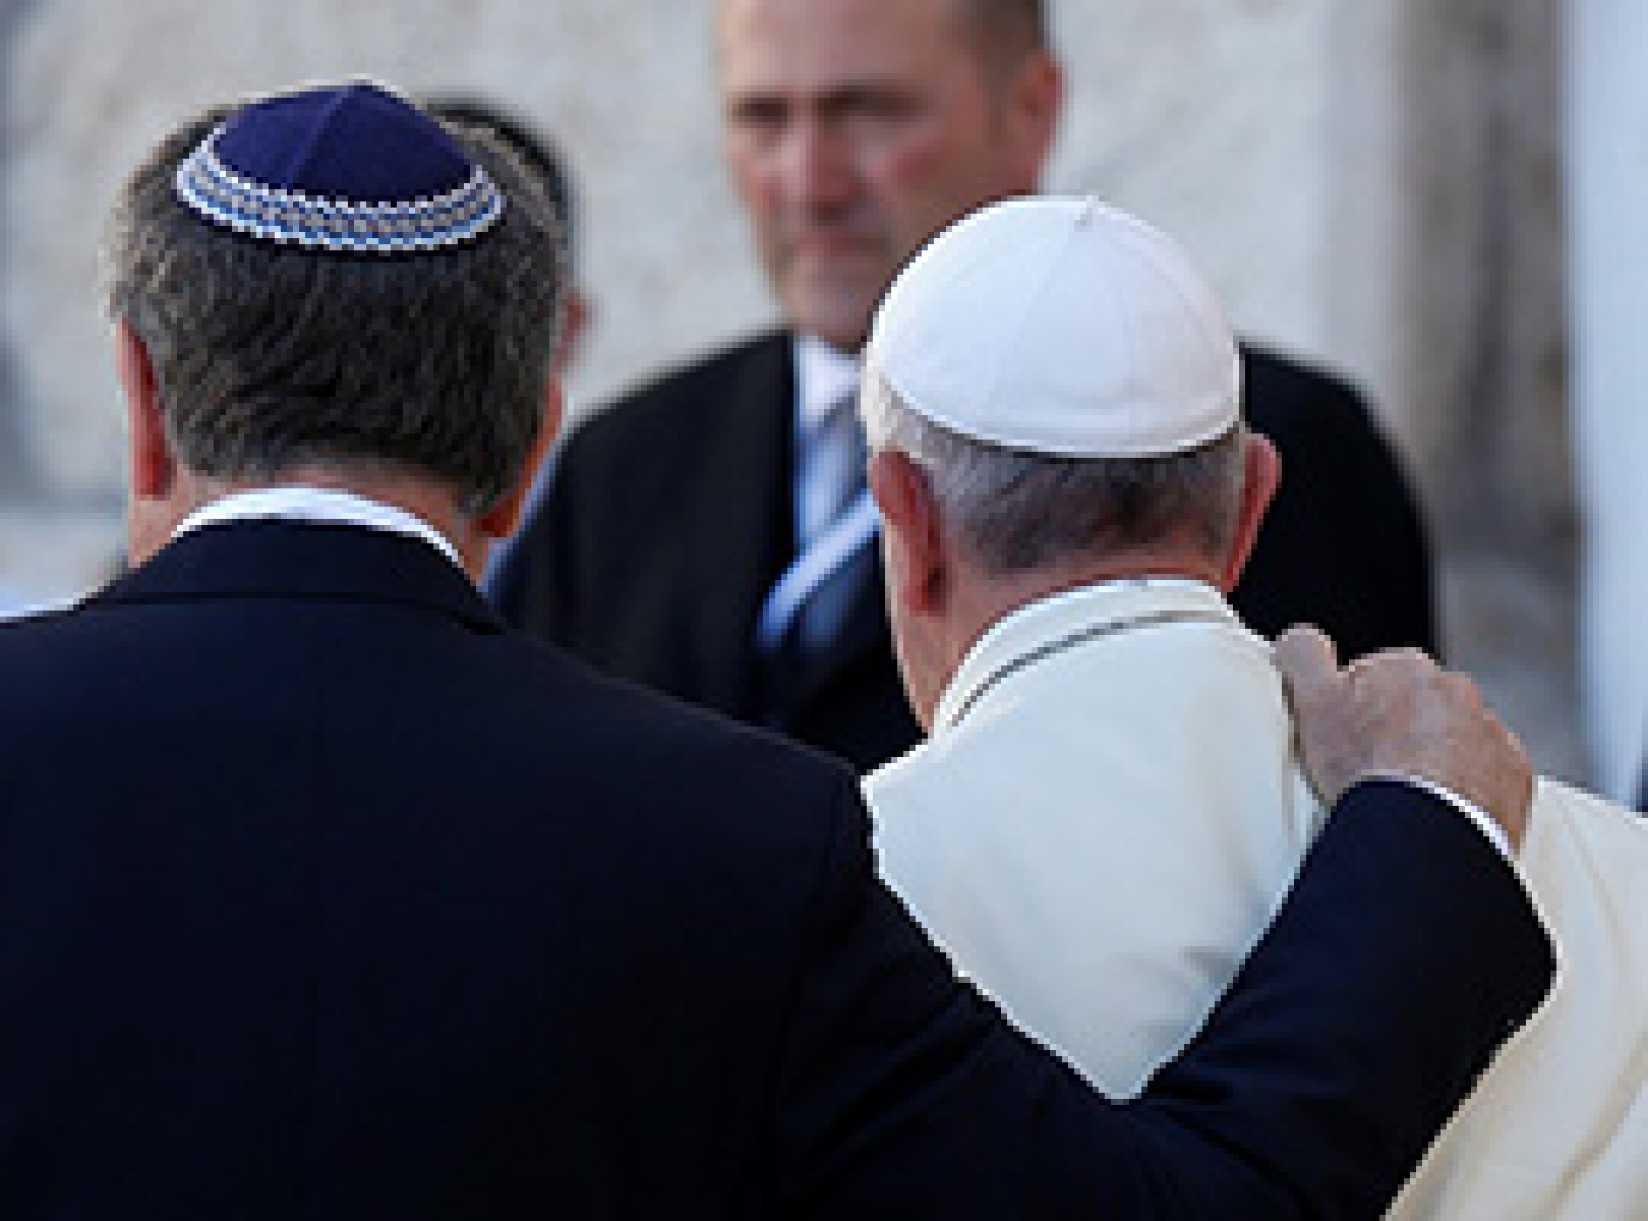 Catholic Leaders Respond to Rising Antisemitism